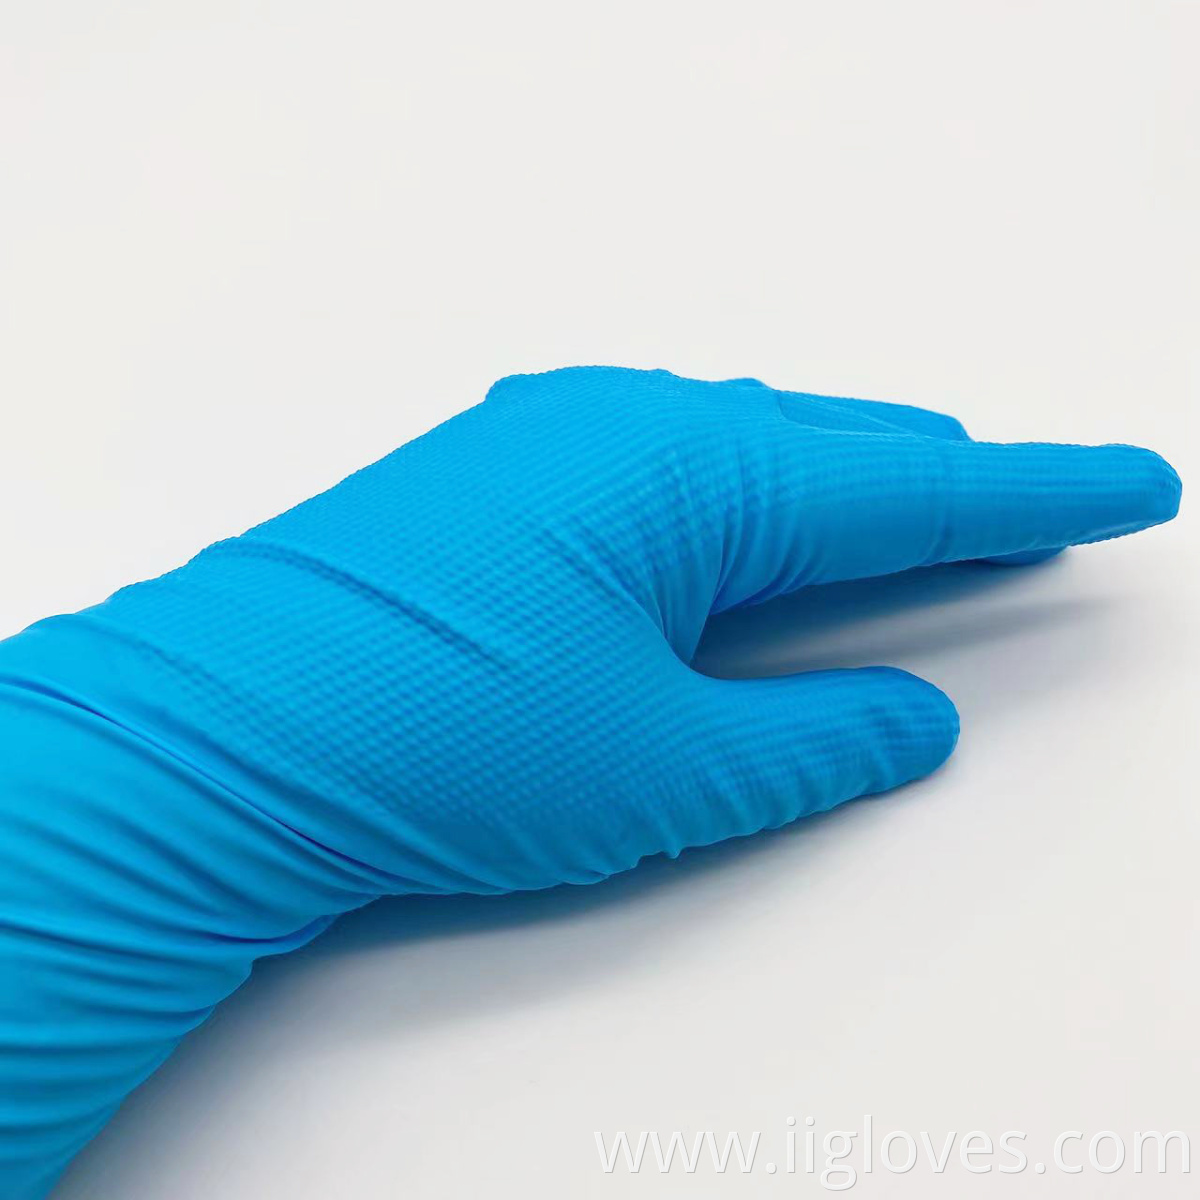 32 cm Length Blue Nitrile Gloves Heavy Duty Oil Acid Alkali Resistant 12 Inch Nitrile Gloves